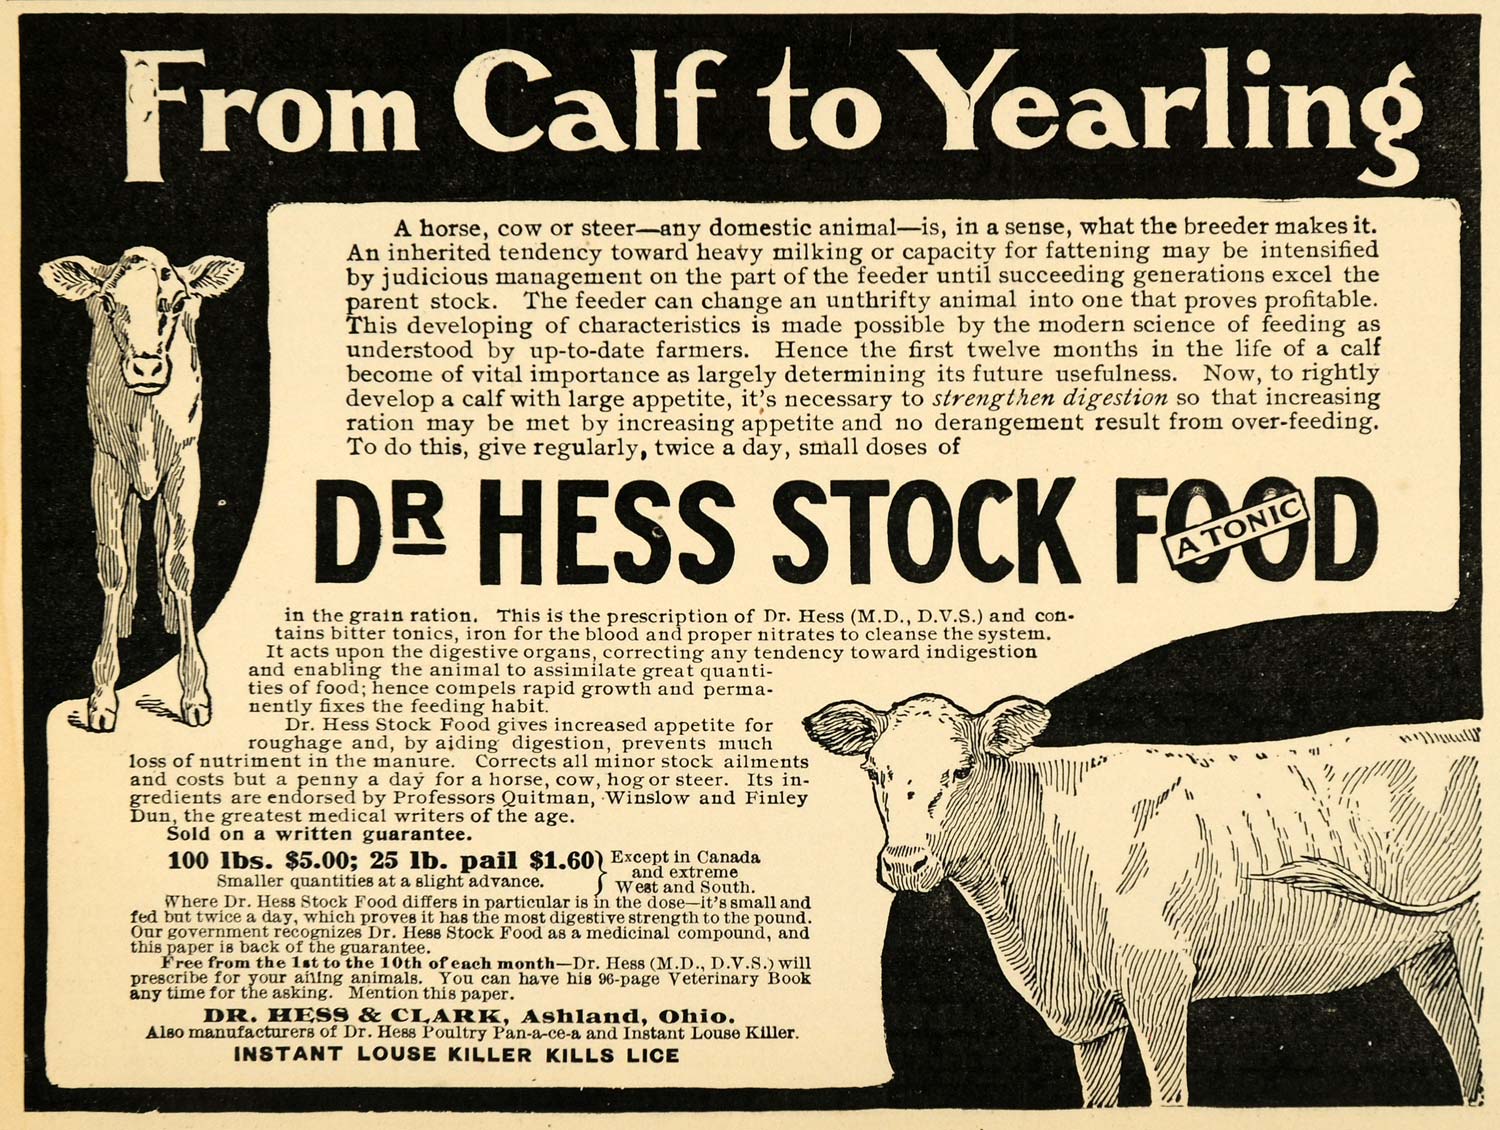 1907 Ad Cattle Digestive Aid Farm Dr. Hess Stock Food - ORIGINAL ADVERTISING CG1